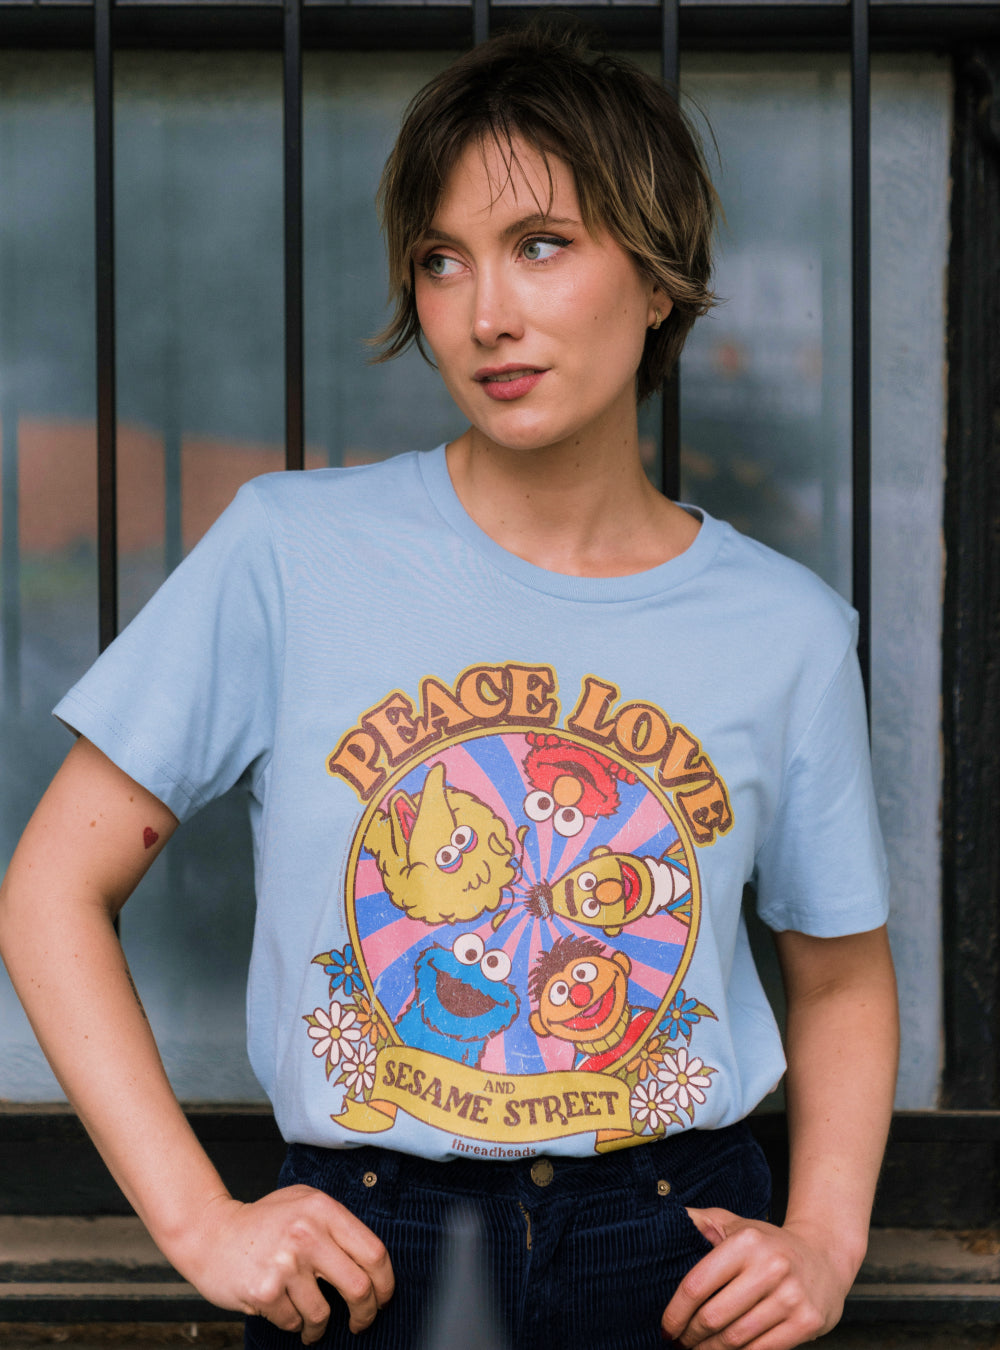 Peace Love And Sesame Street T-Shirt Australia Online #colour_pale blue